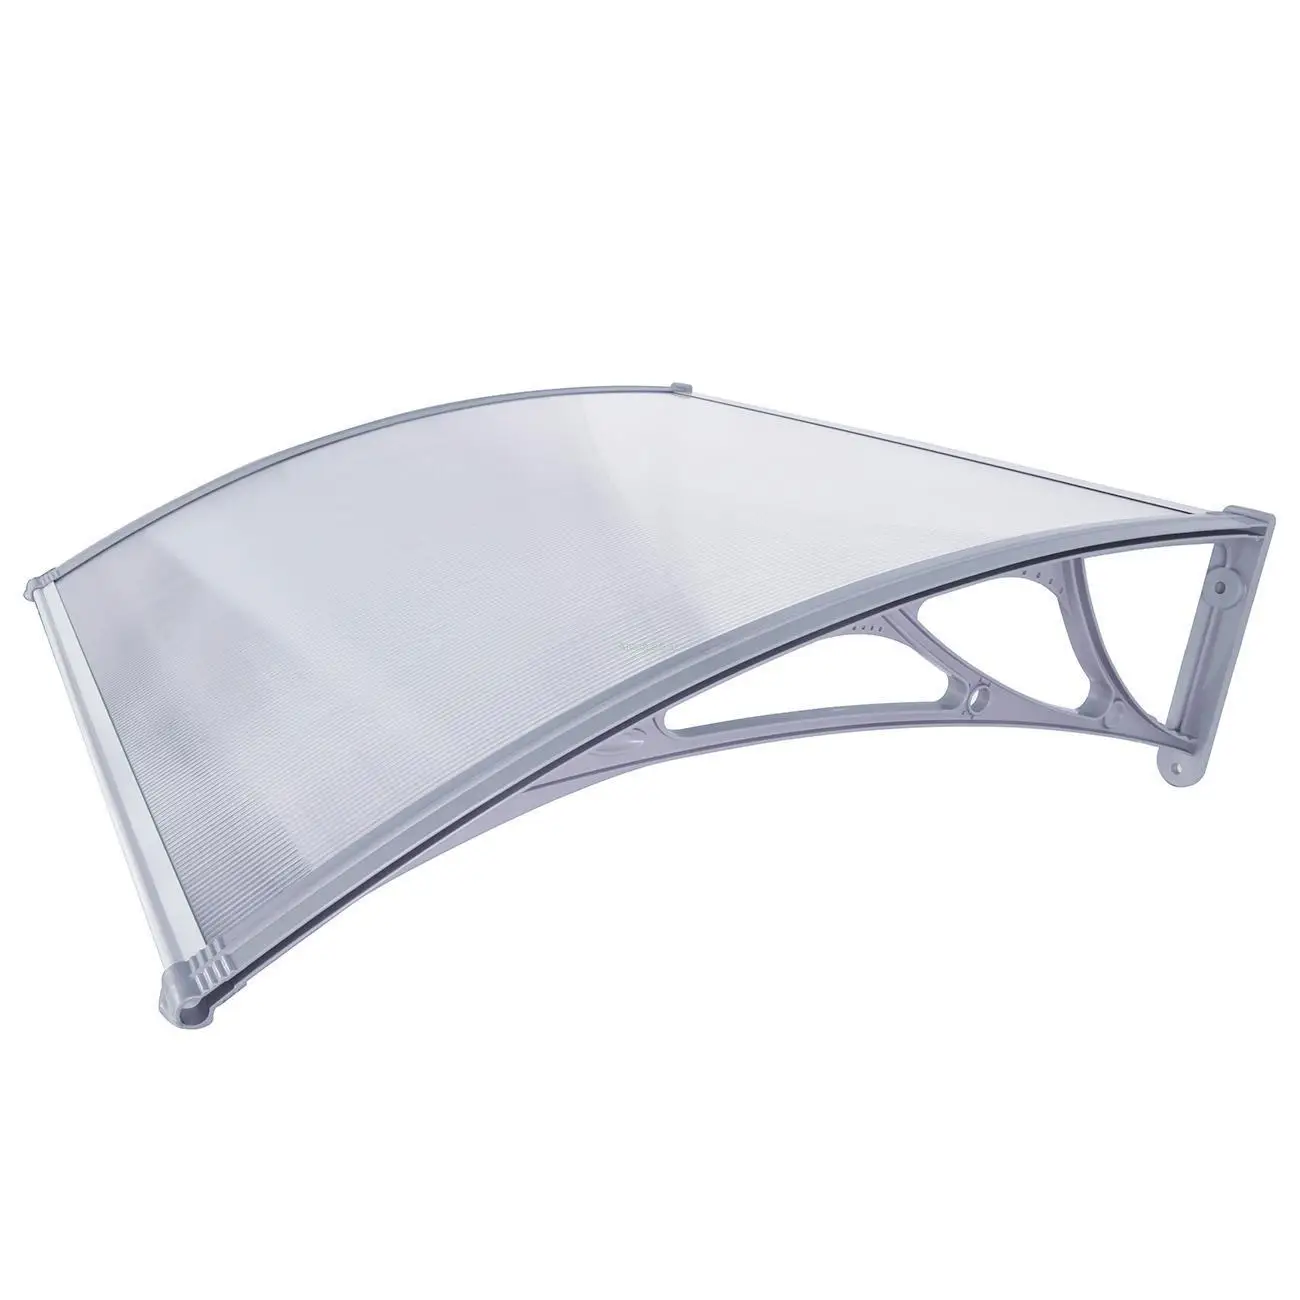 39"x39" Window Door Awning Outdoor Sun UV Rain Cover DIY Canopy Patio Shield 